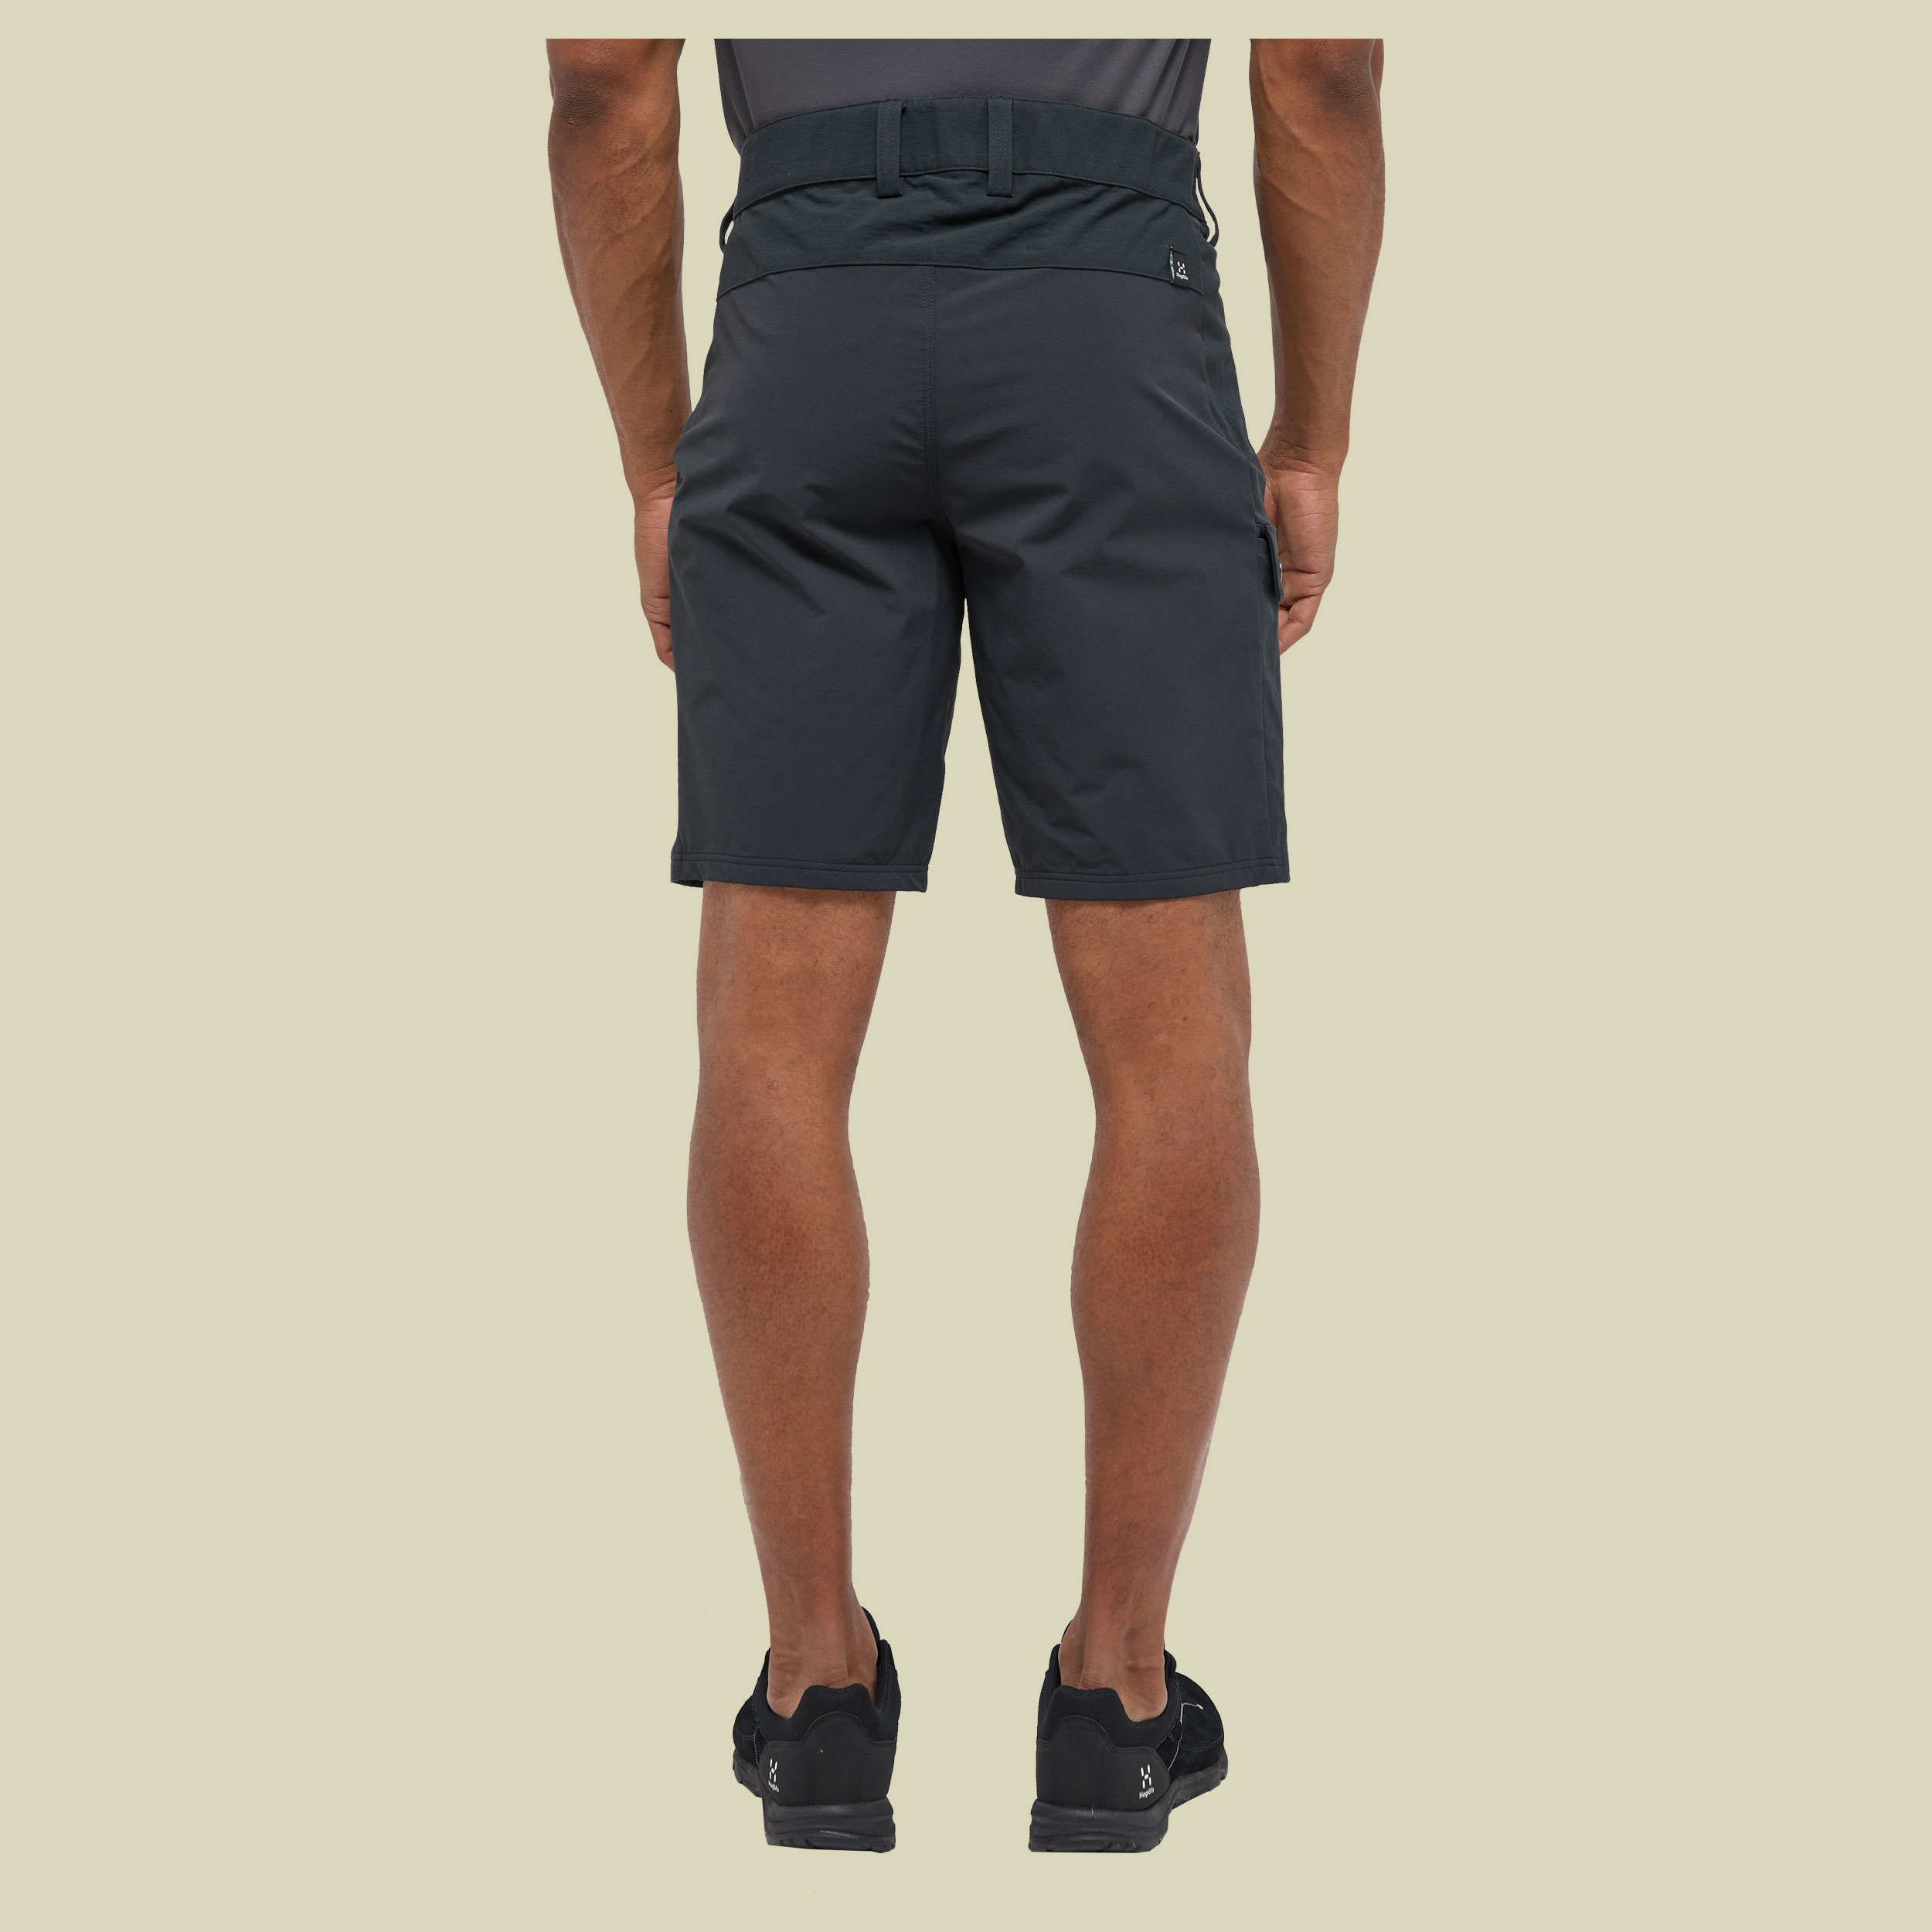 Mid Standard Shorts Men 52 schwarz - true black